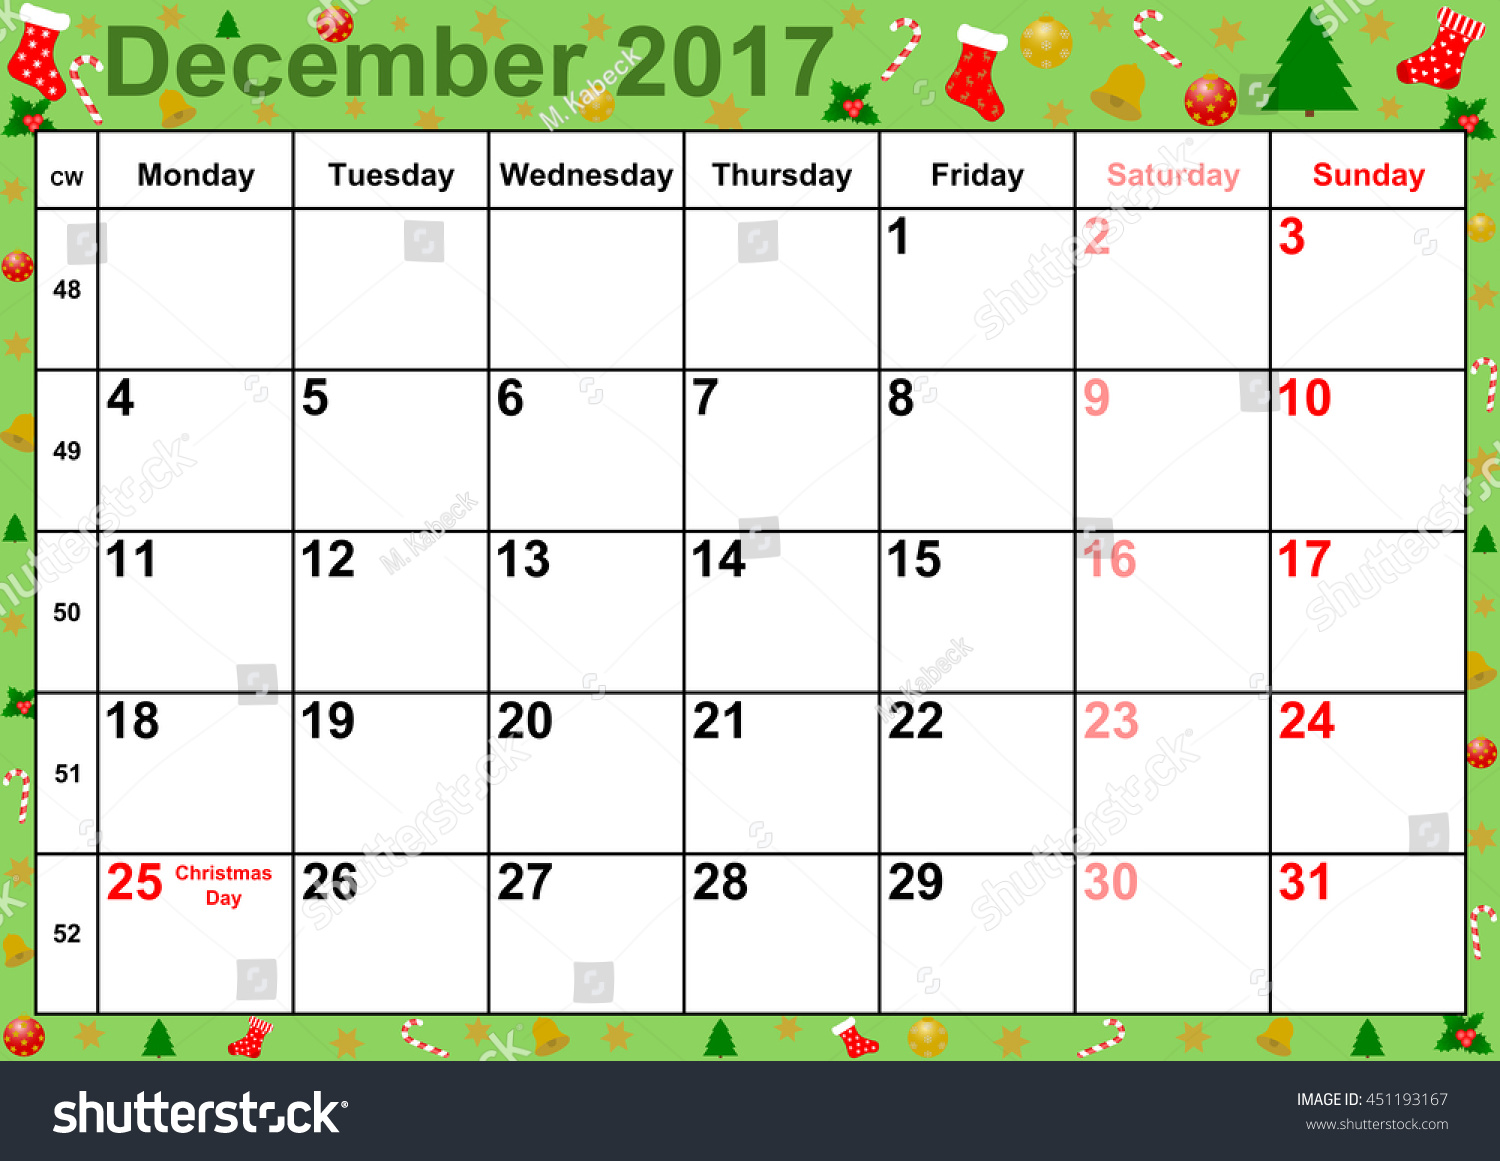 december-2017-calendar-printable-calendars